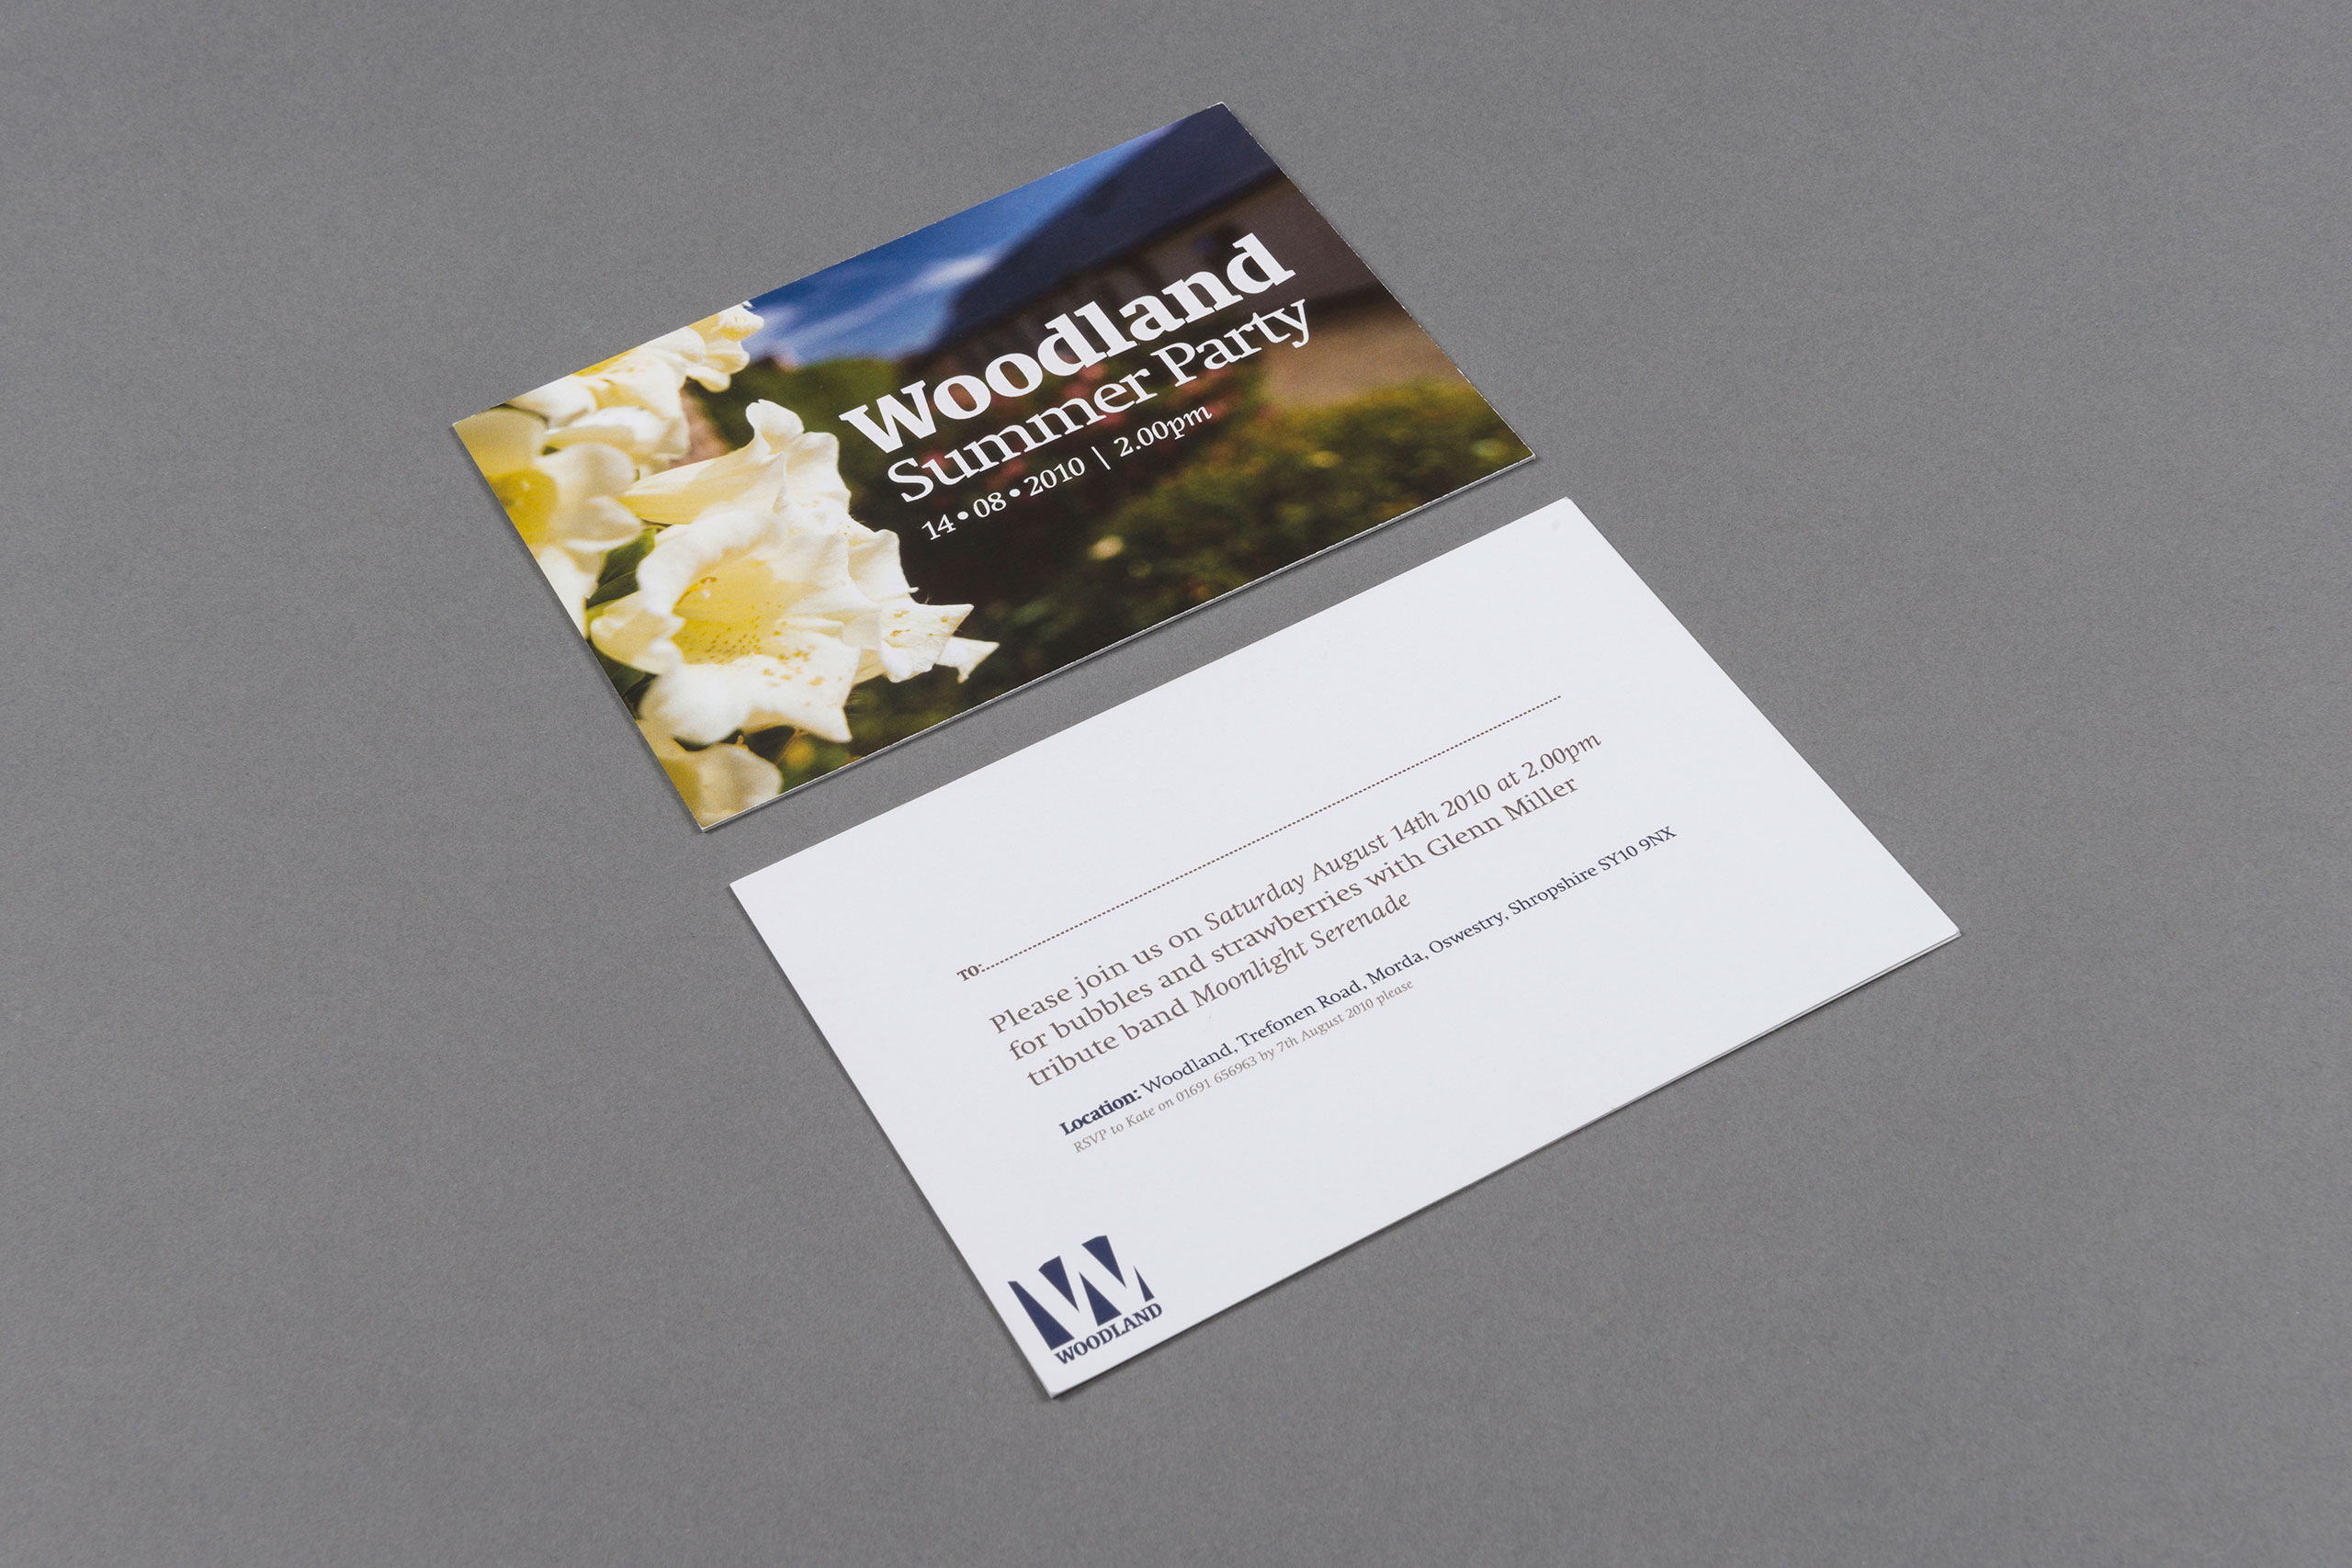 Woodland Care